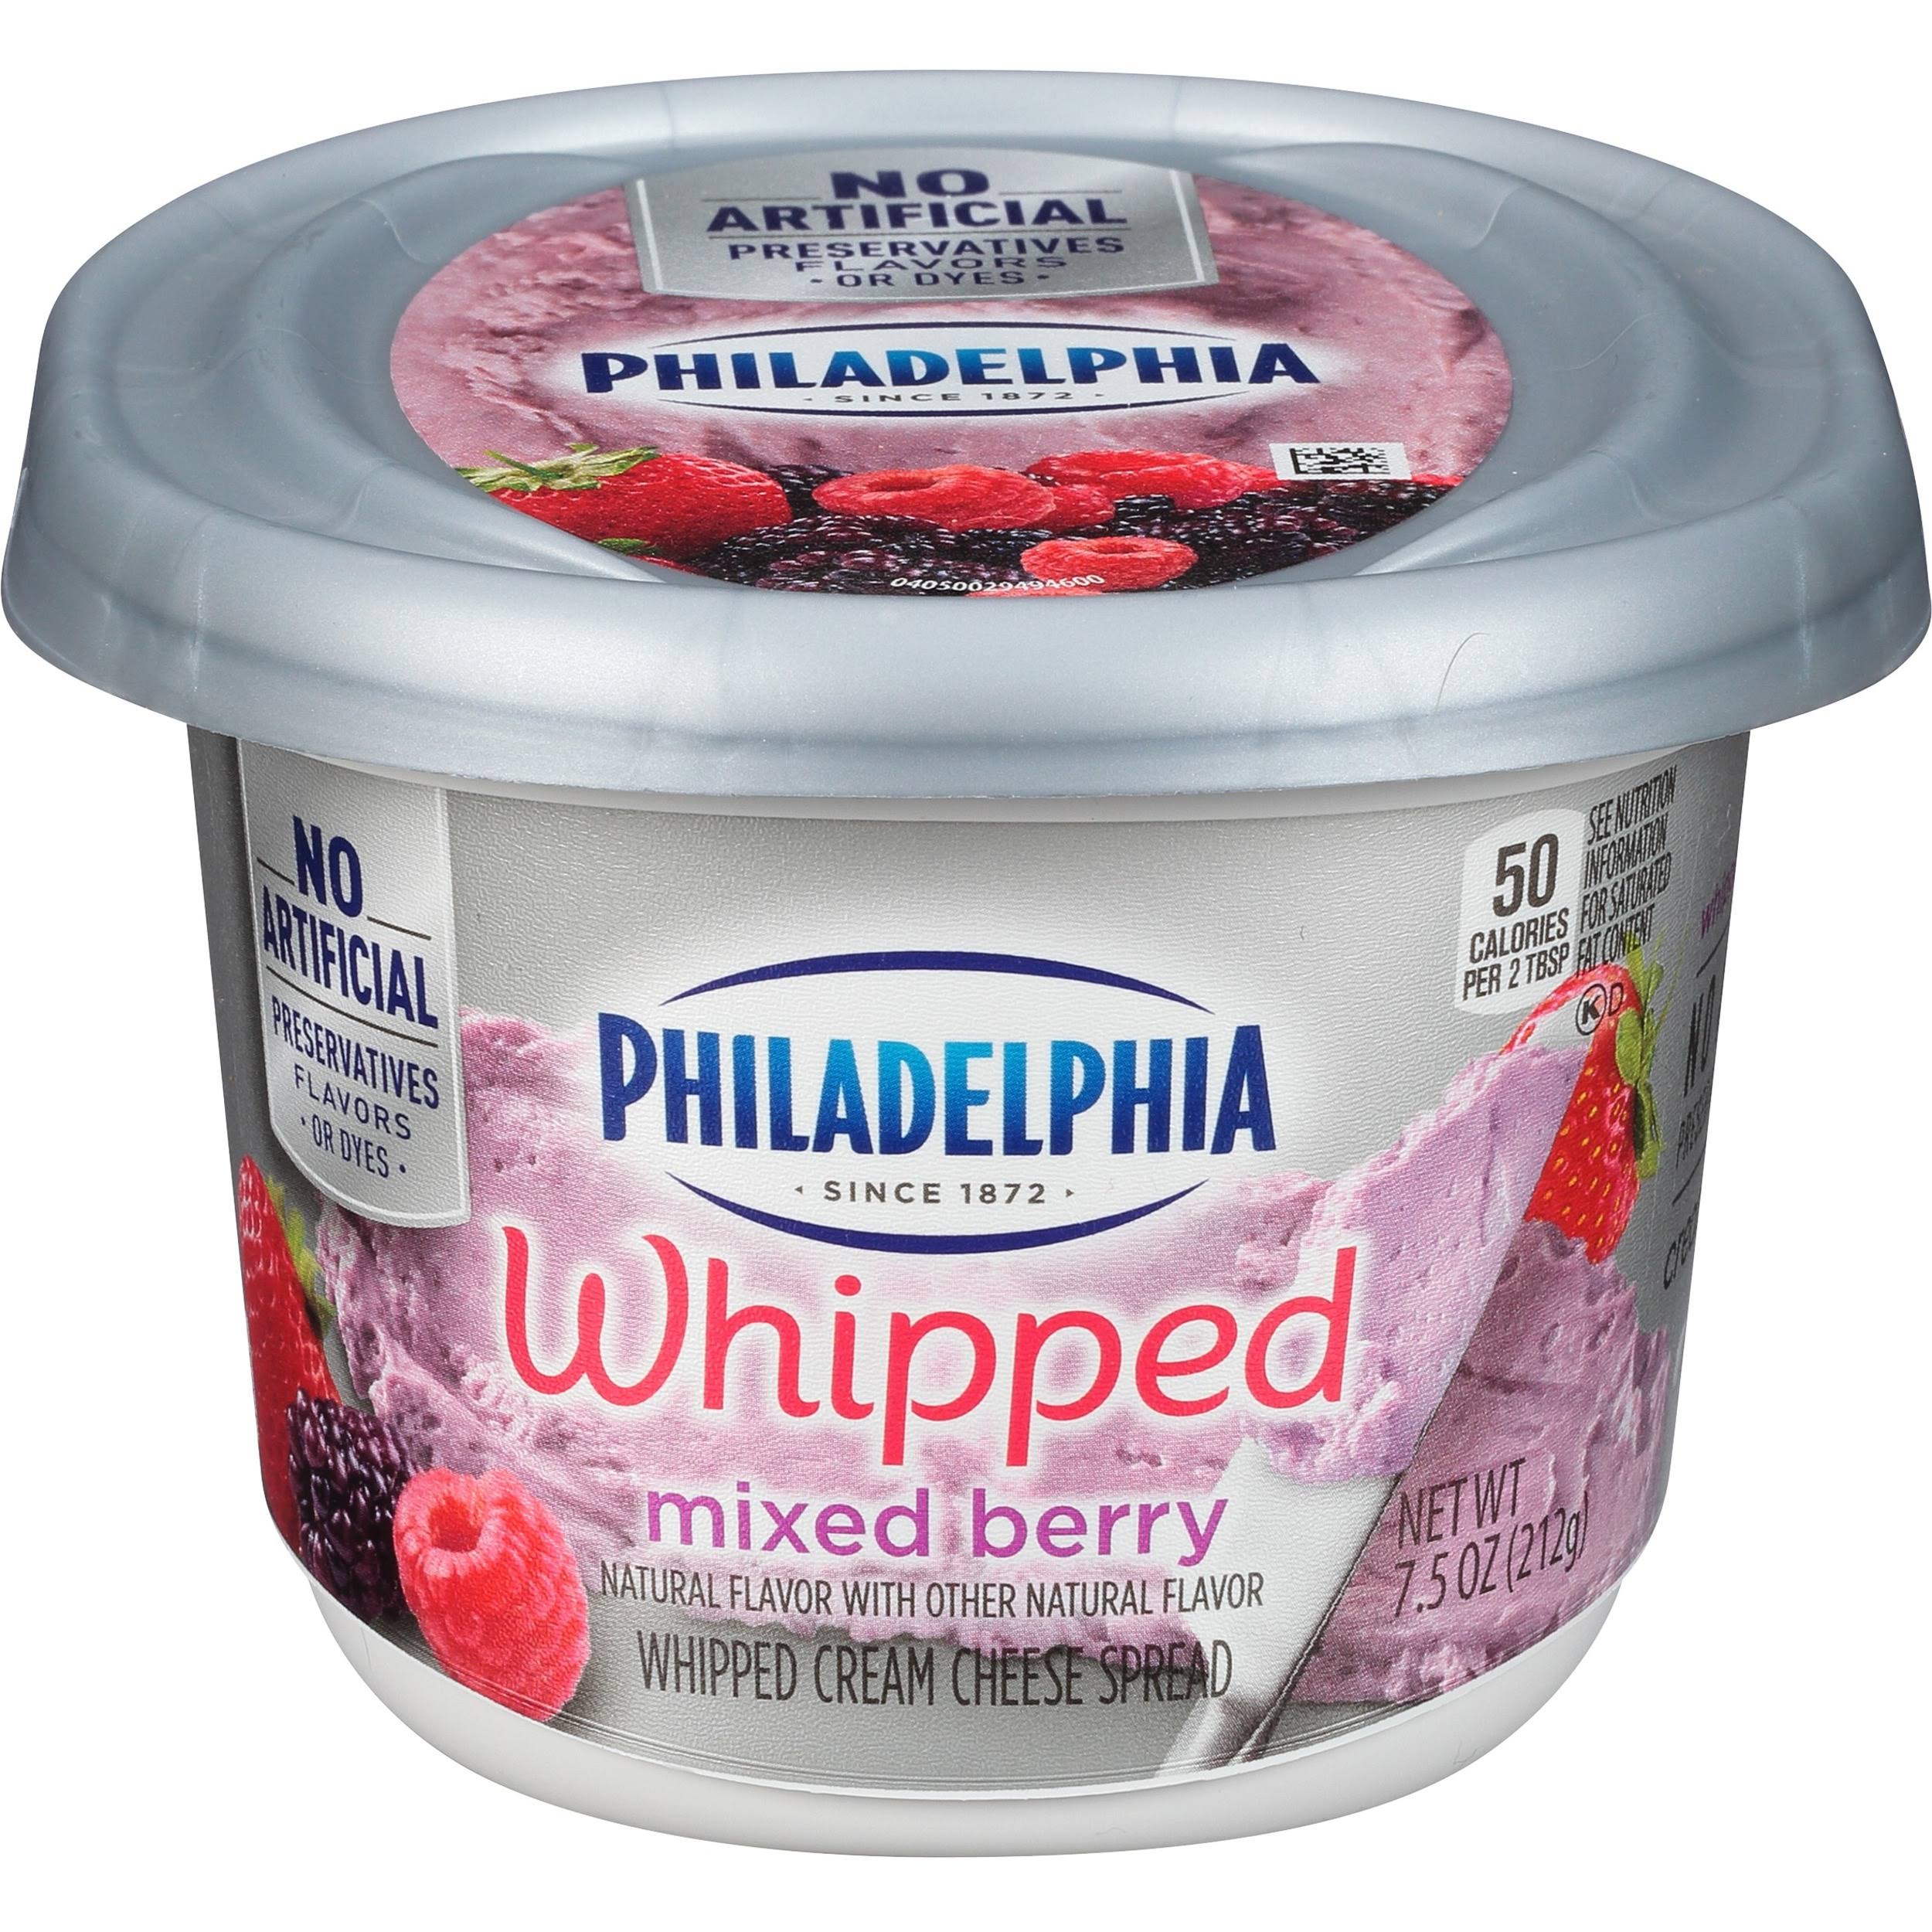 Philadelphia Whipped Cream Cheese Spread, Mixed Berry - 7.5 oz